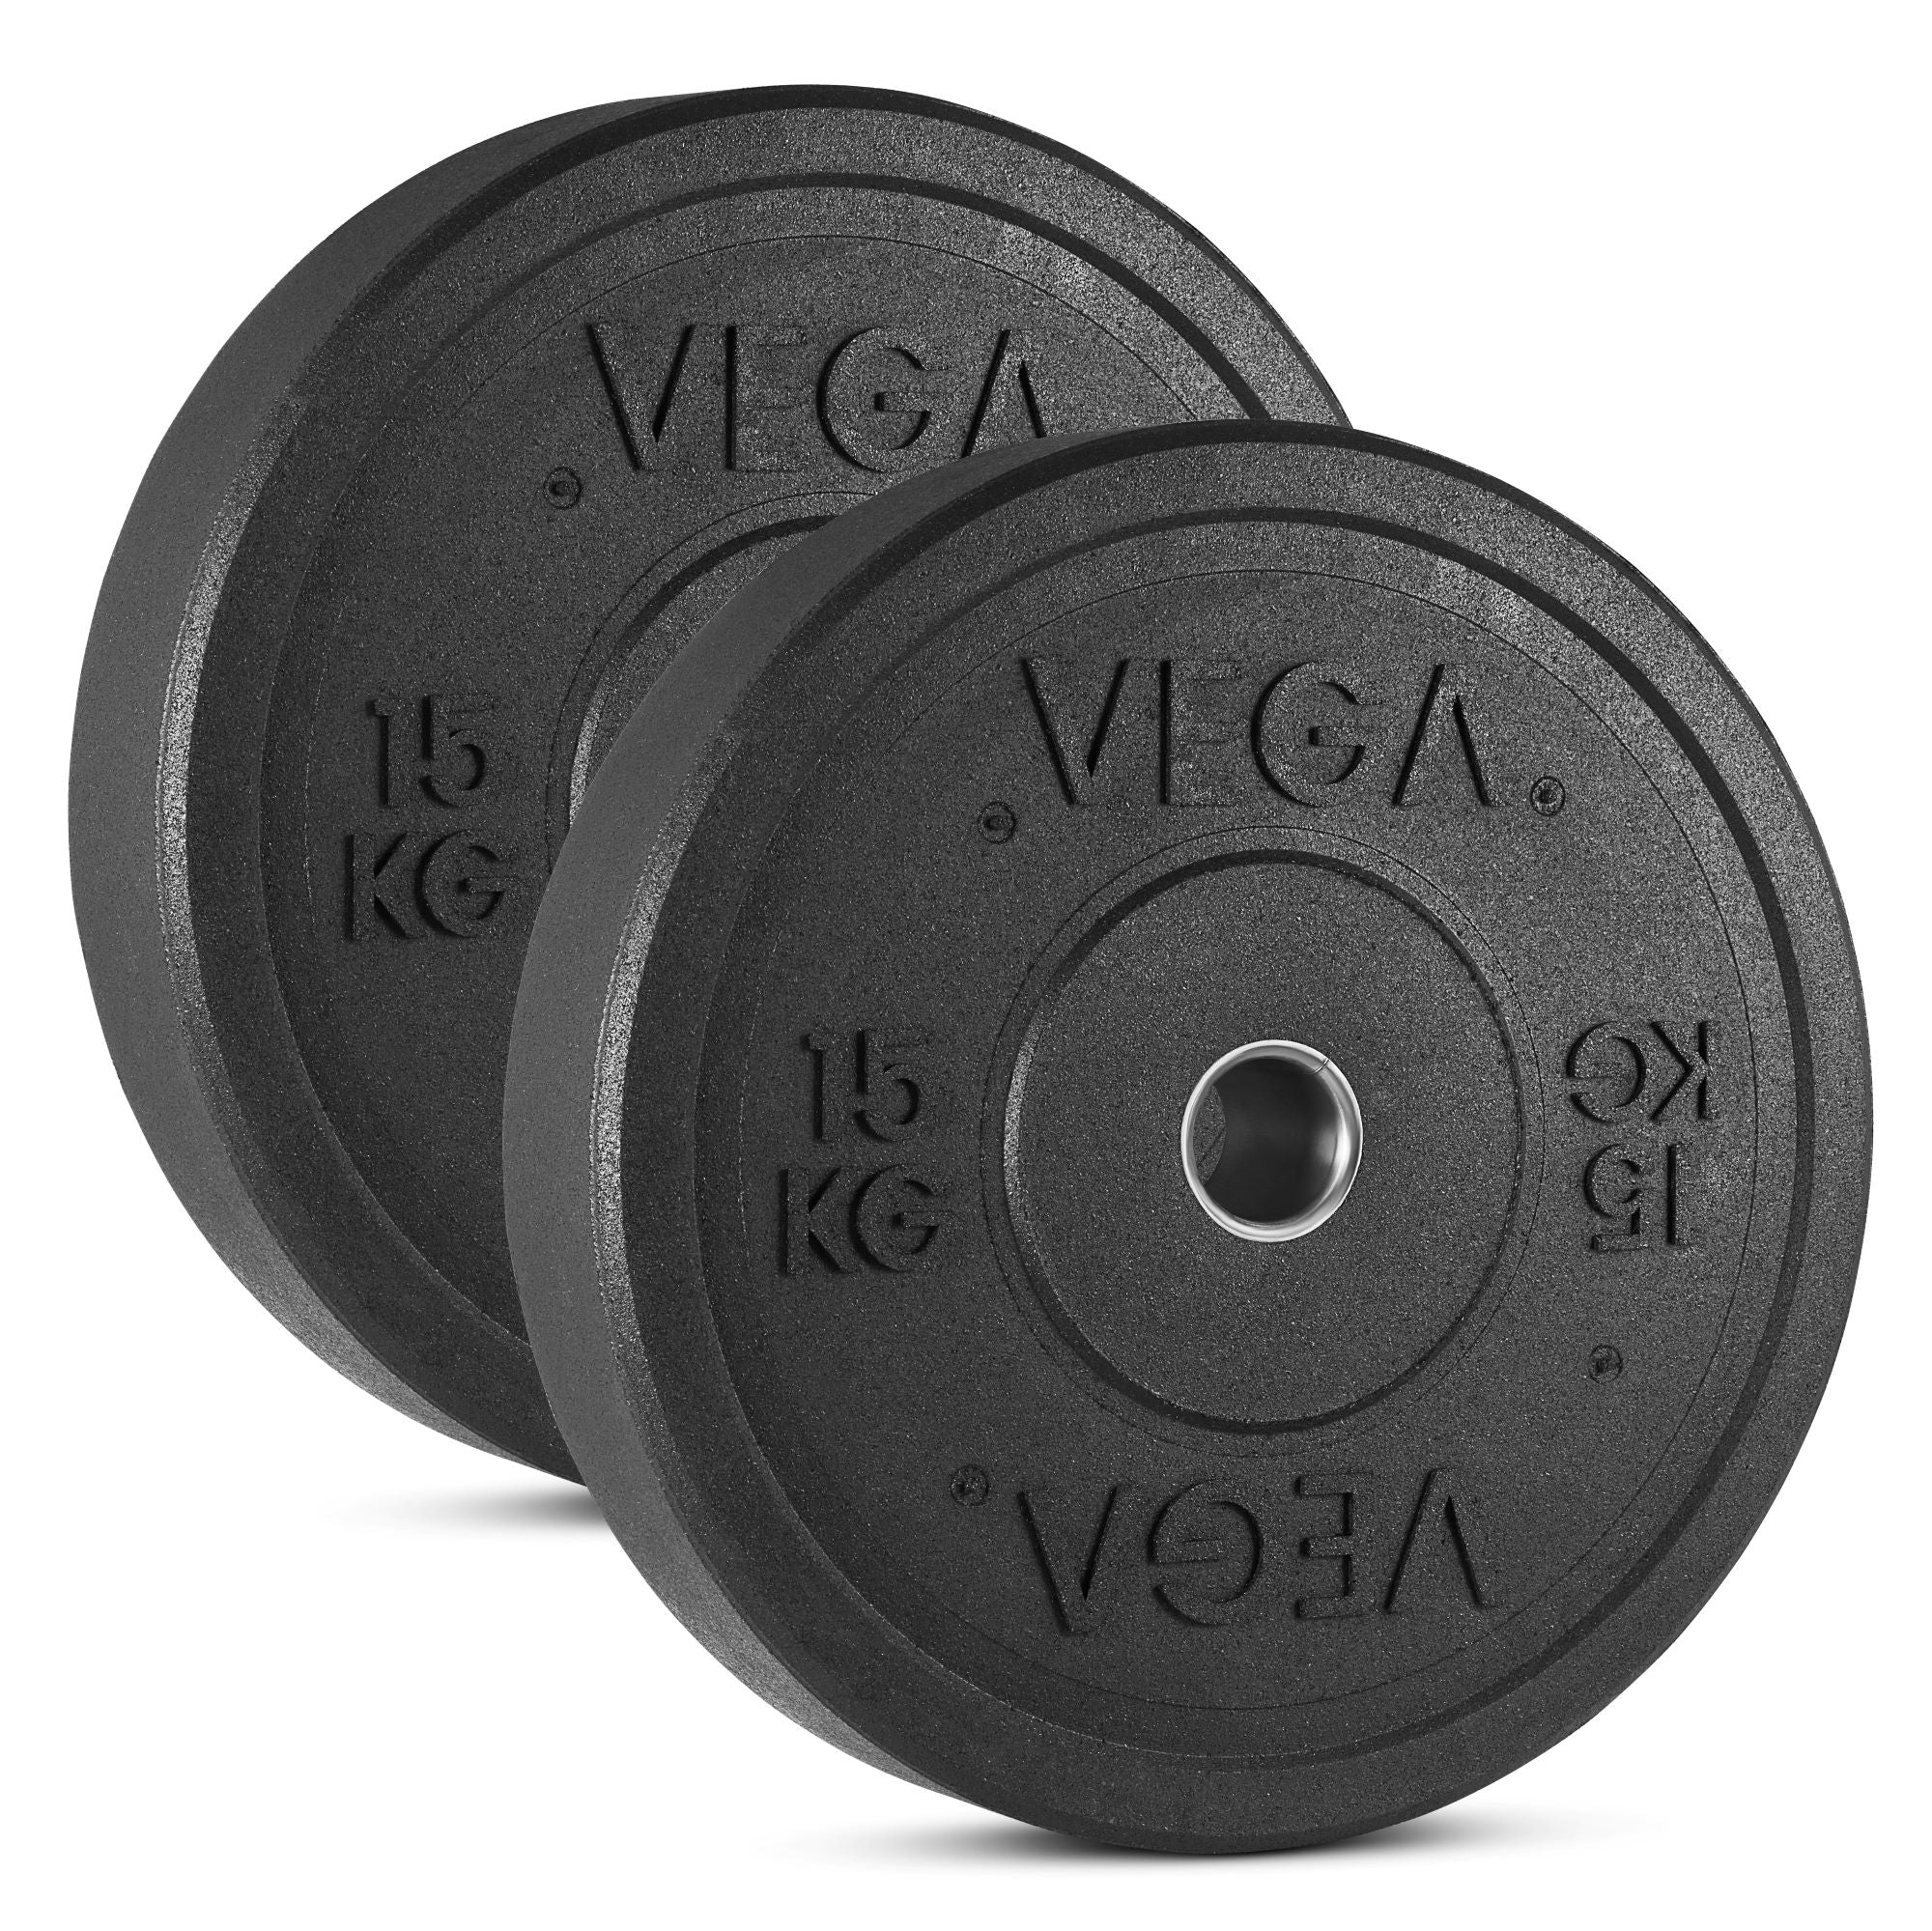 Vega International Black Rubber Bumper Plate 15kg